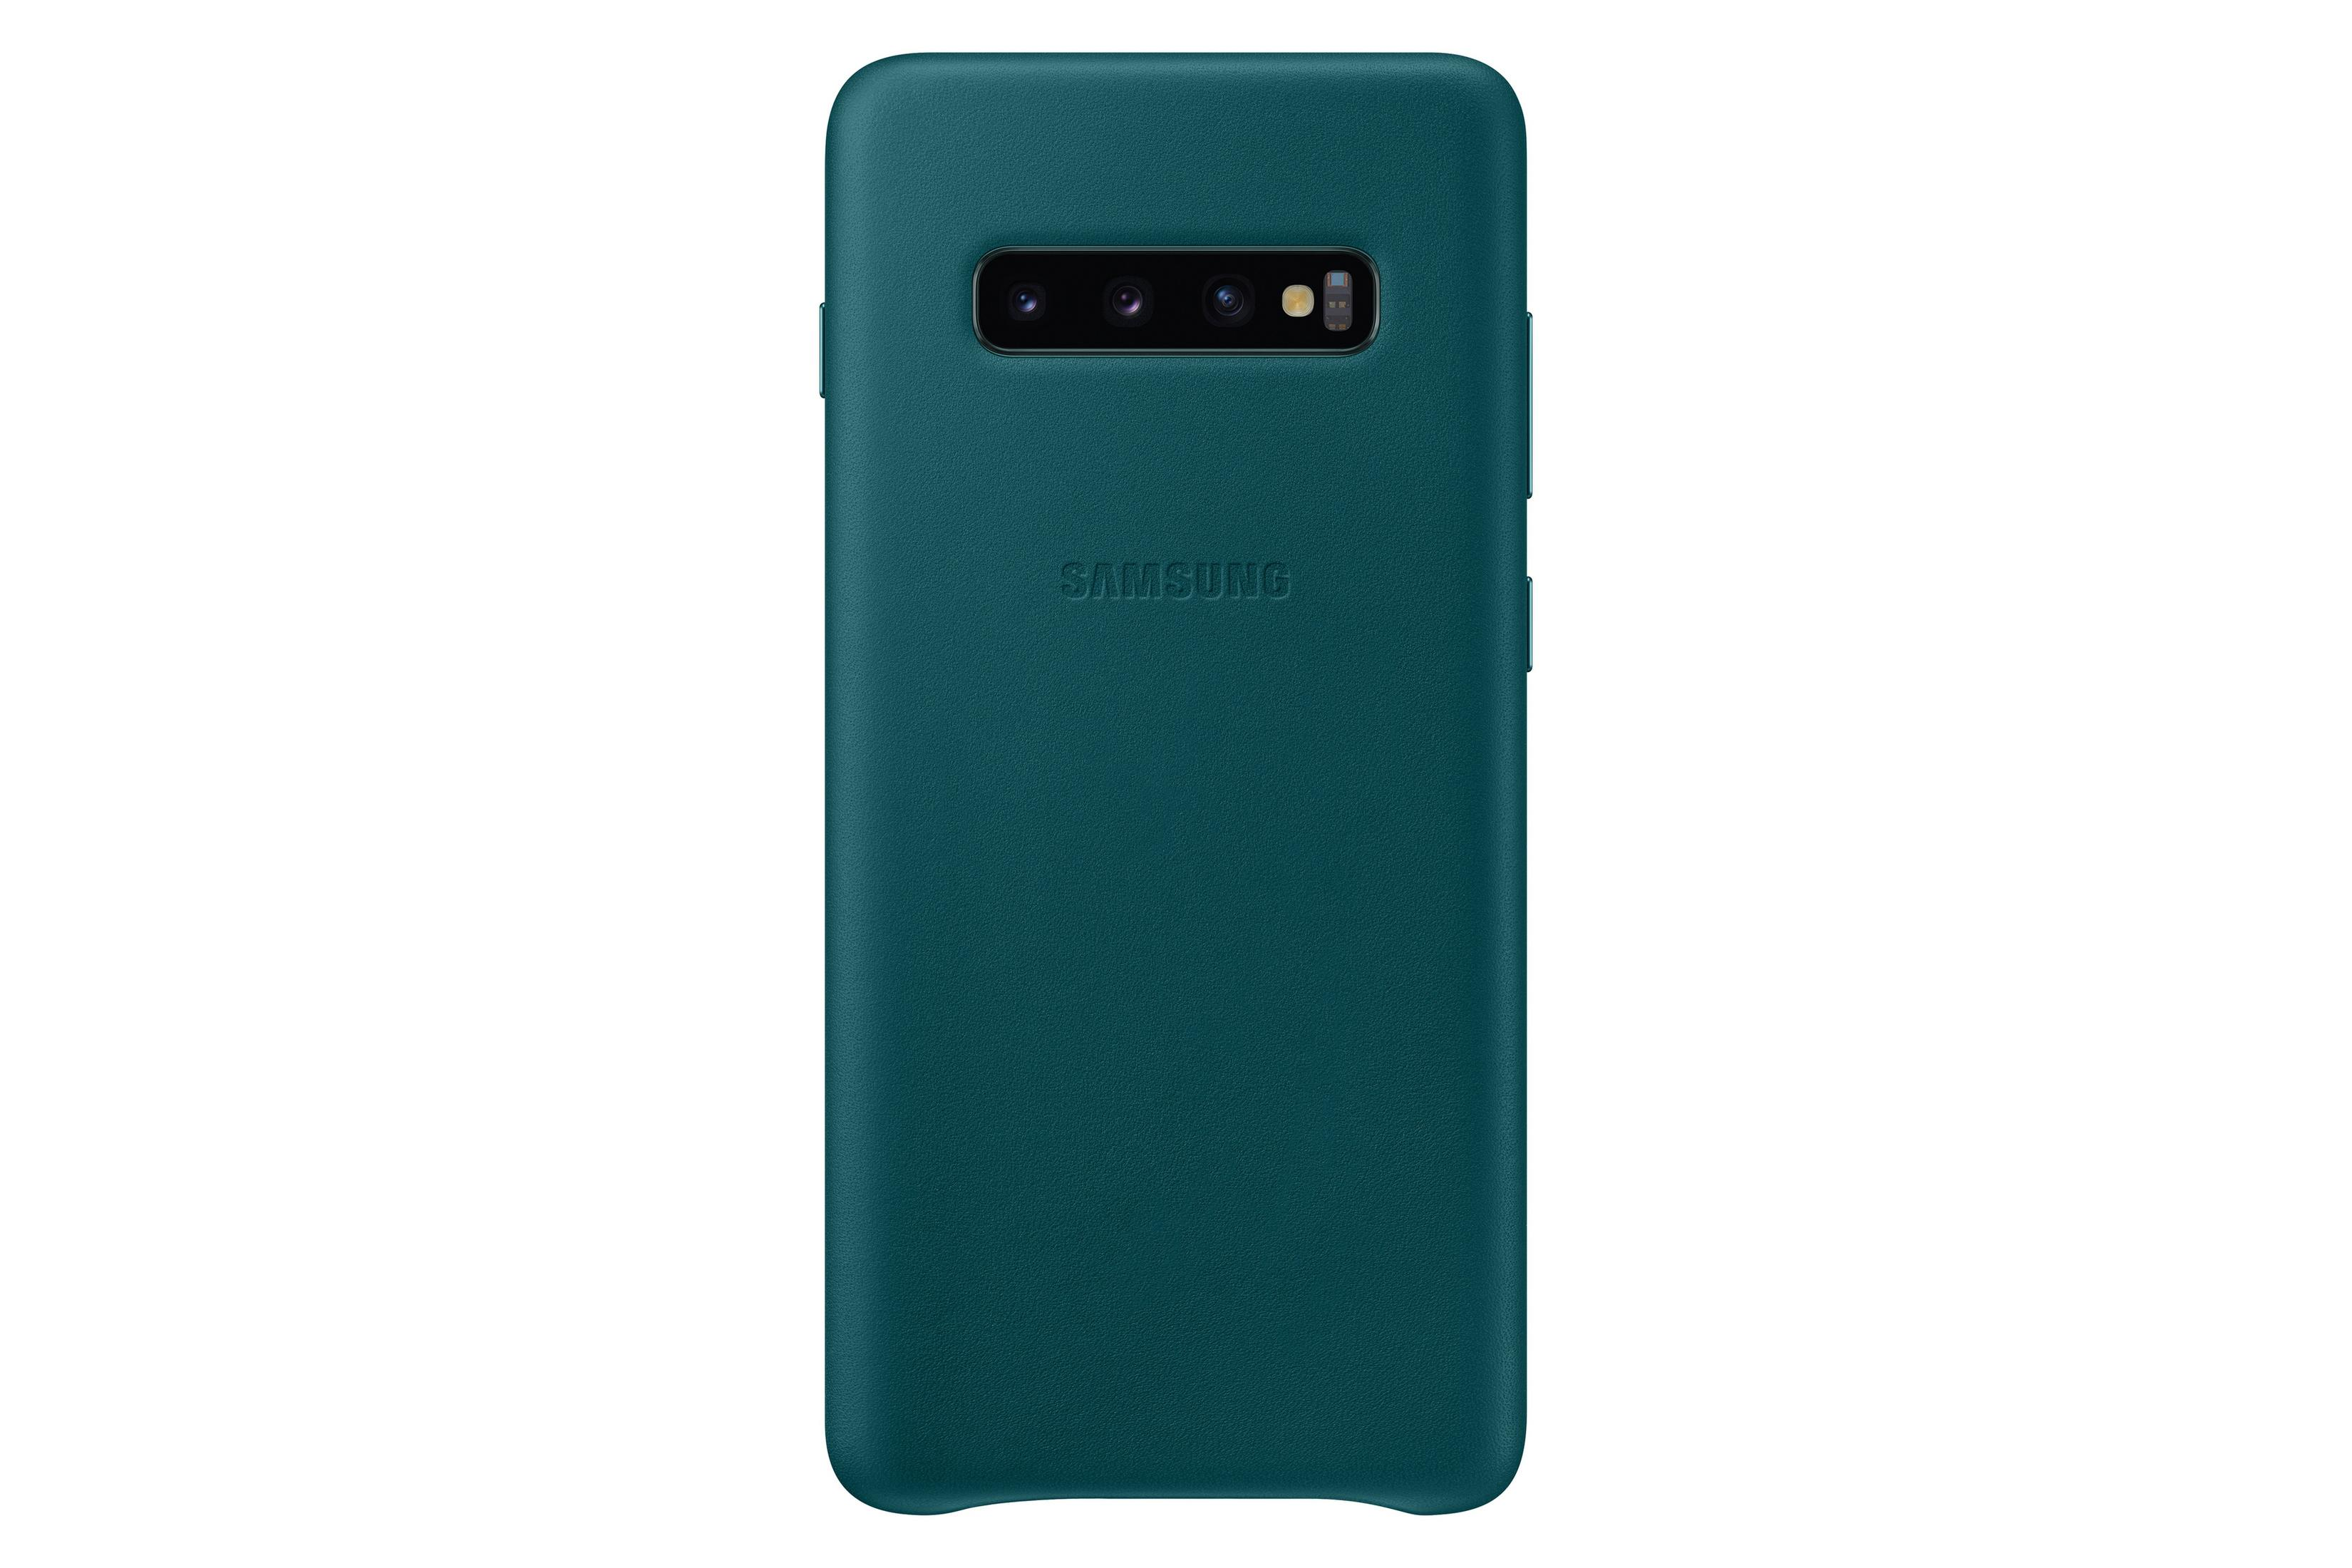 Backcover, Grün EF-VG975LGEGWW LEATHER Samsung, Galaxy SAMSUNG GREEN, COVER S10+, S10+